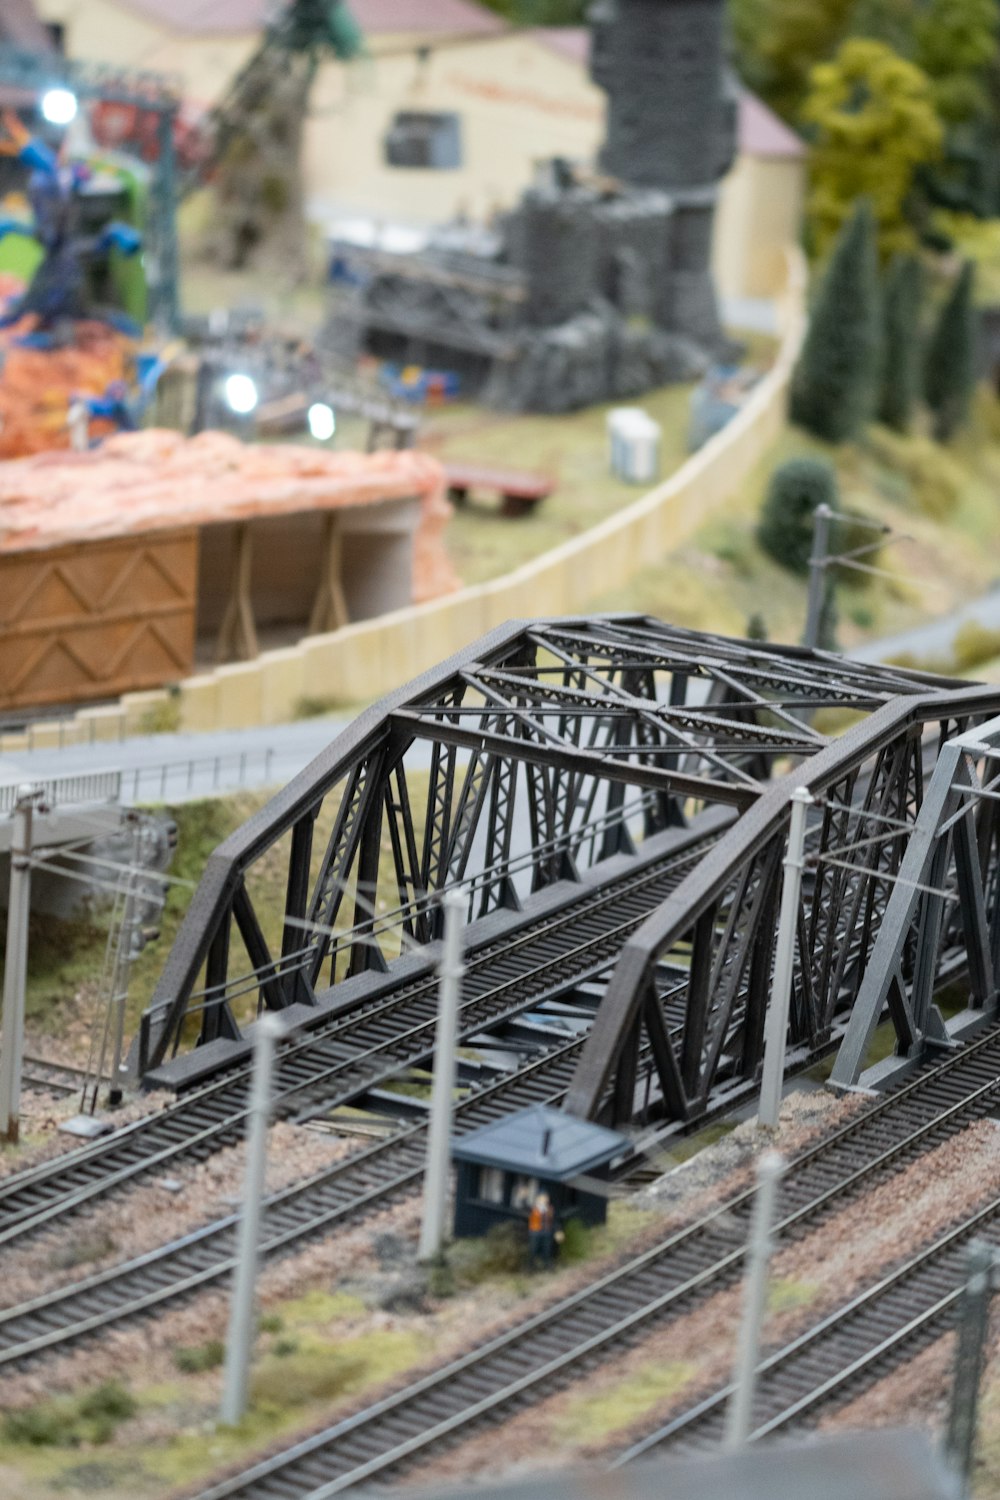 a model train set with a bridge and train tracks